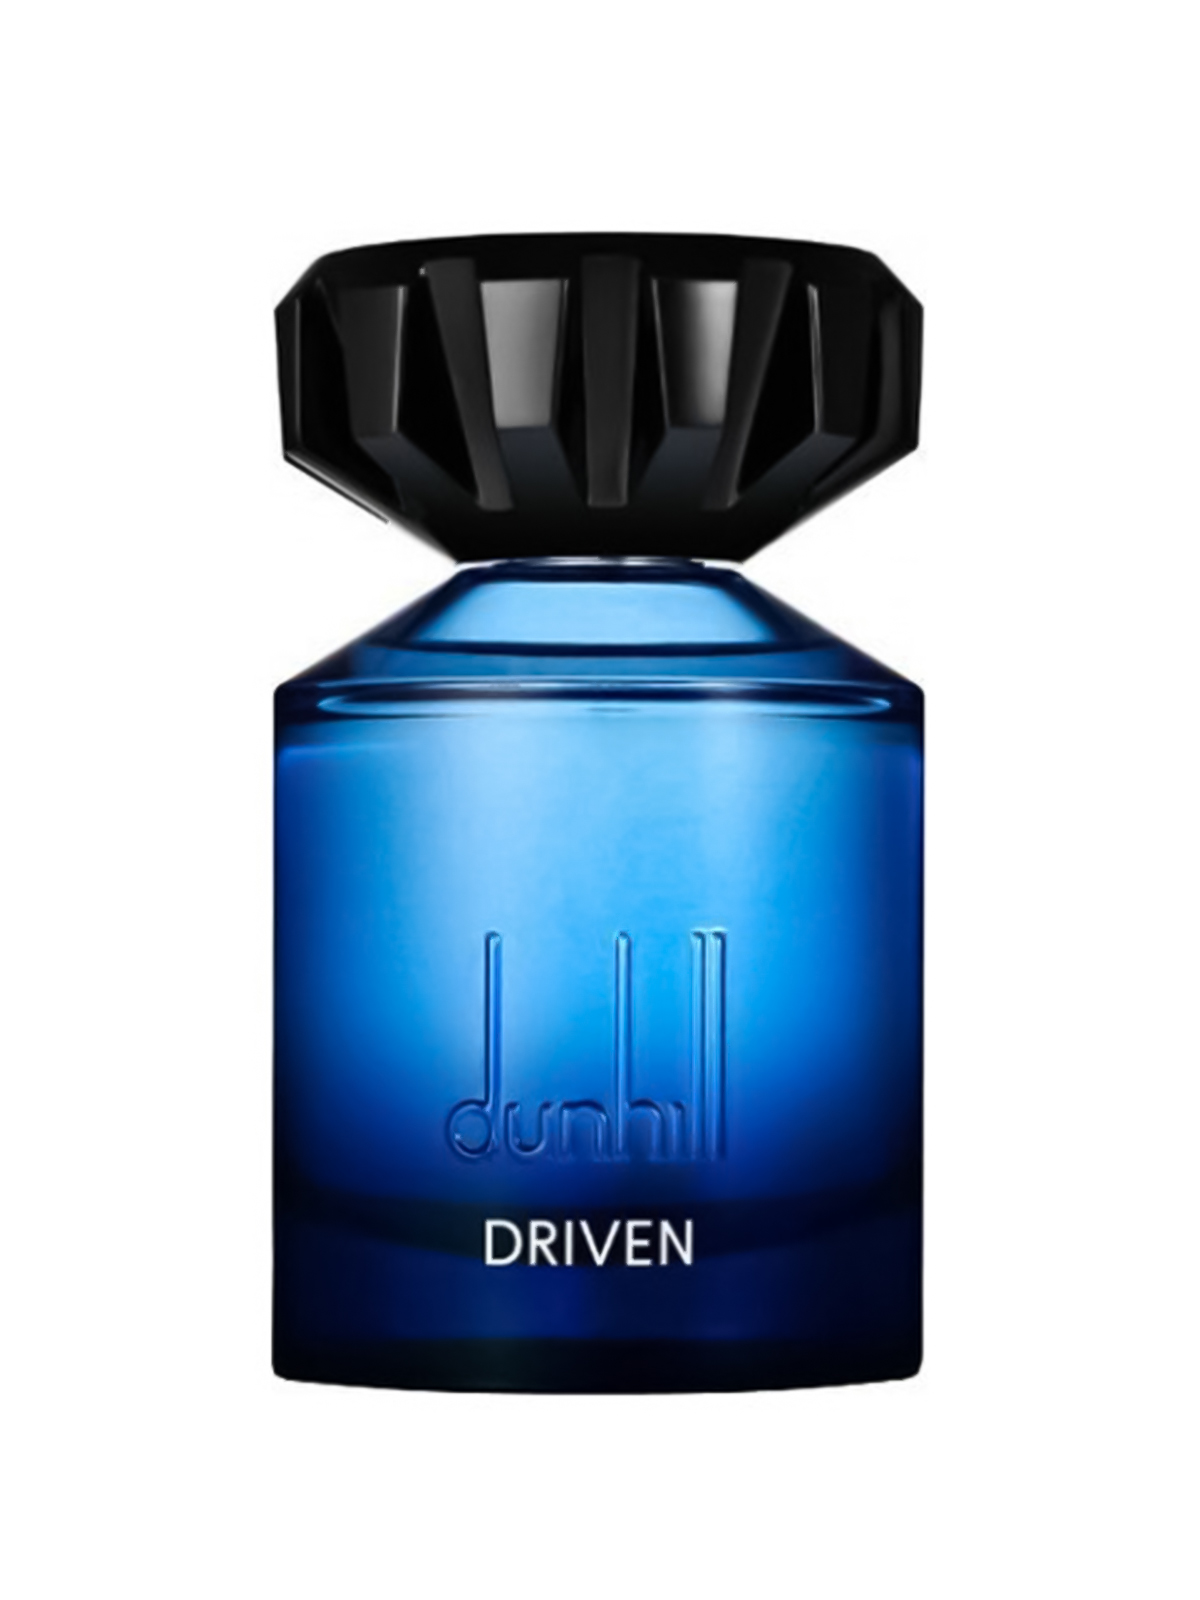 DUNHILL DRIVEN BLUE / دانهیل دریون بلو